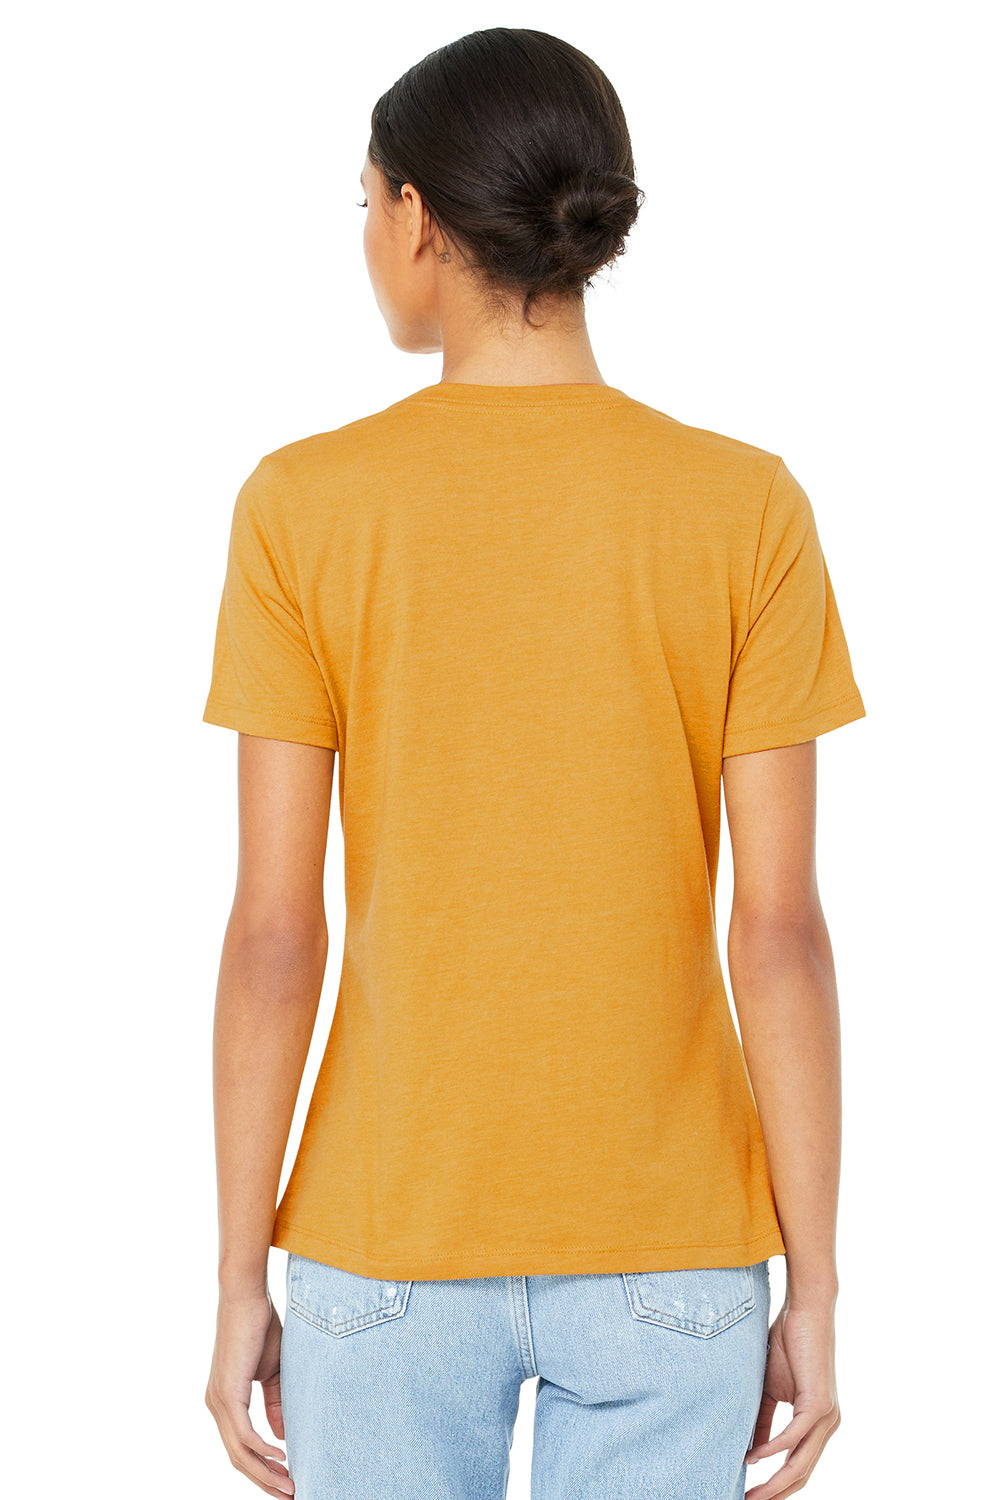 Bella + Canvas BC6400/B6400/6400 Womens Relaxed Jersey Short Sleeve Crewneck T-Shirt Mustard Yellow Model Back